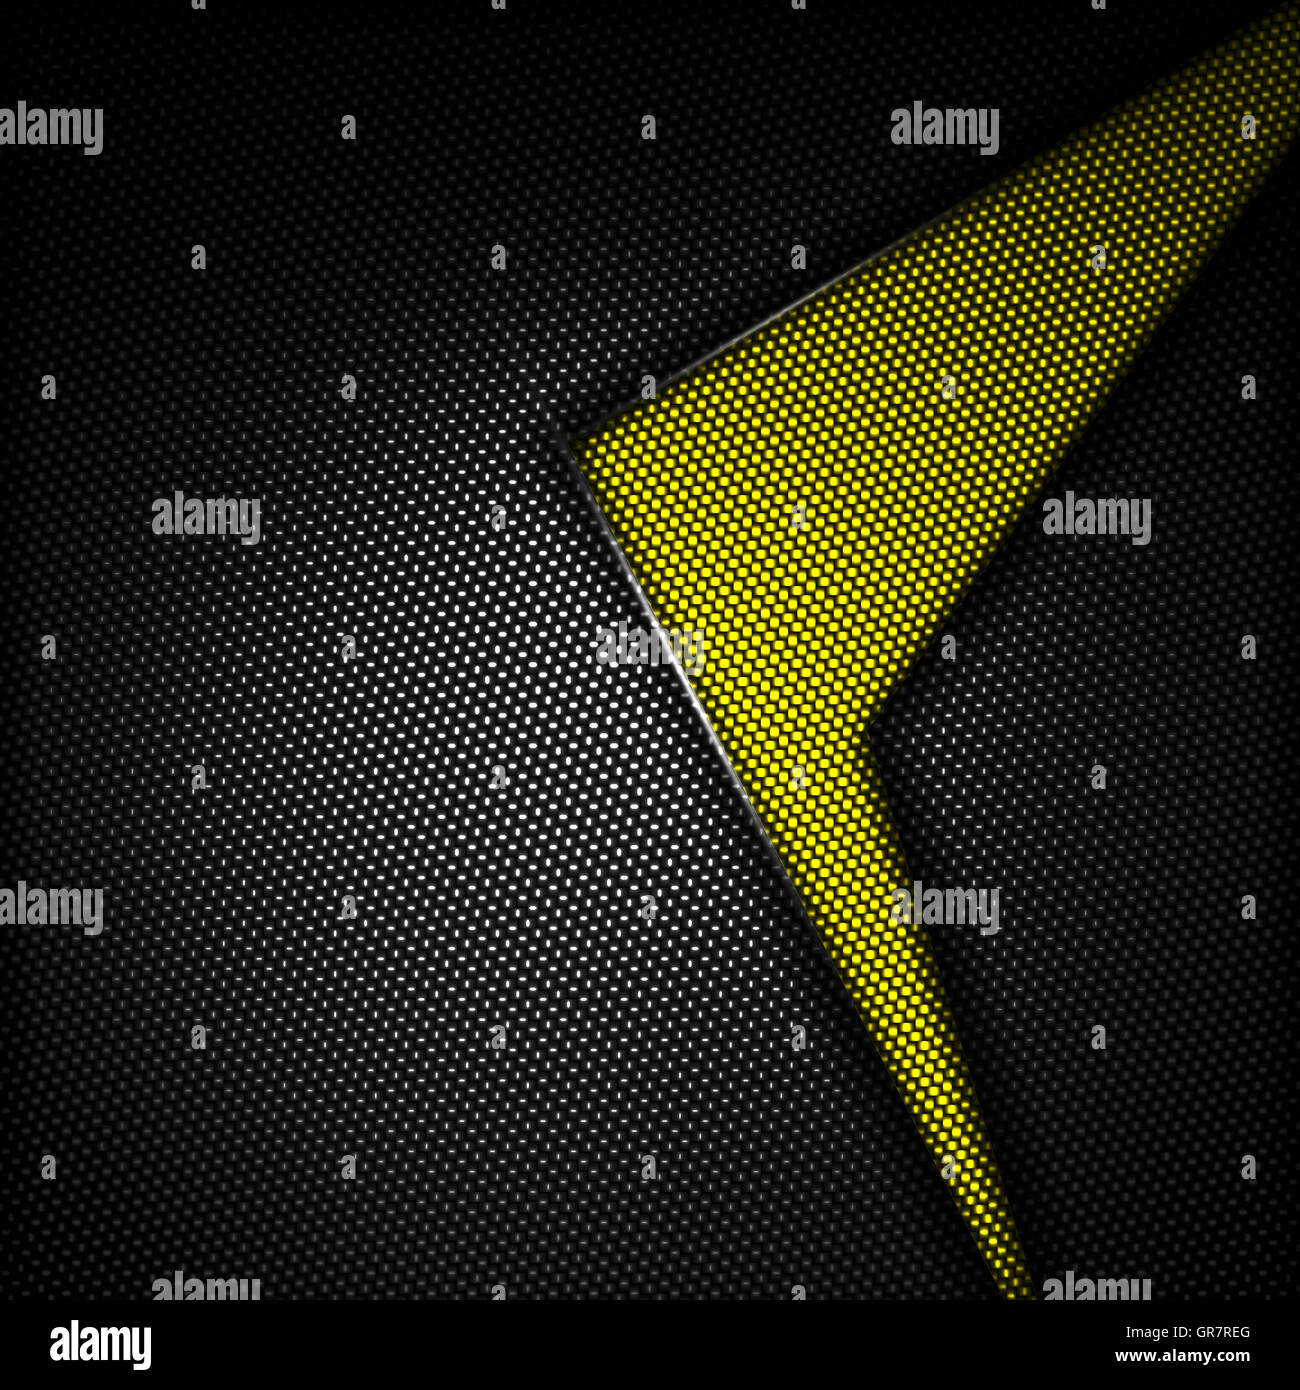 Download 44 Background Keren Untuk Logo HD Terbaru - Download Background